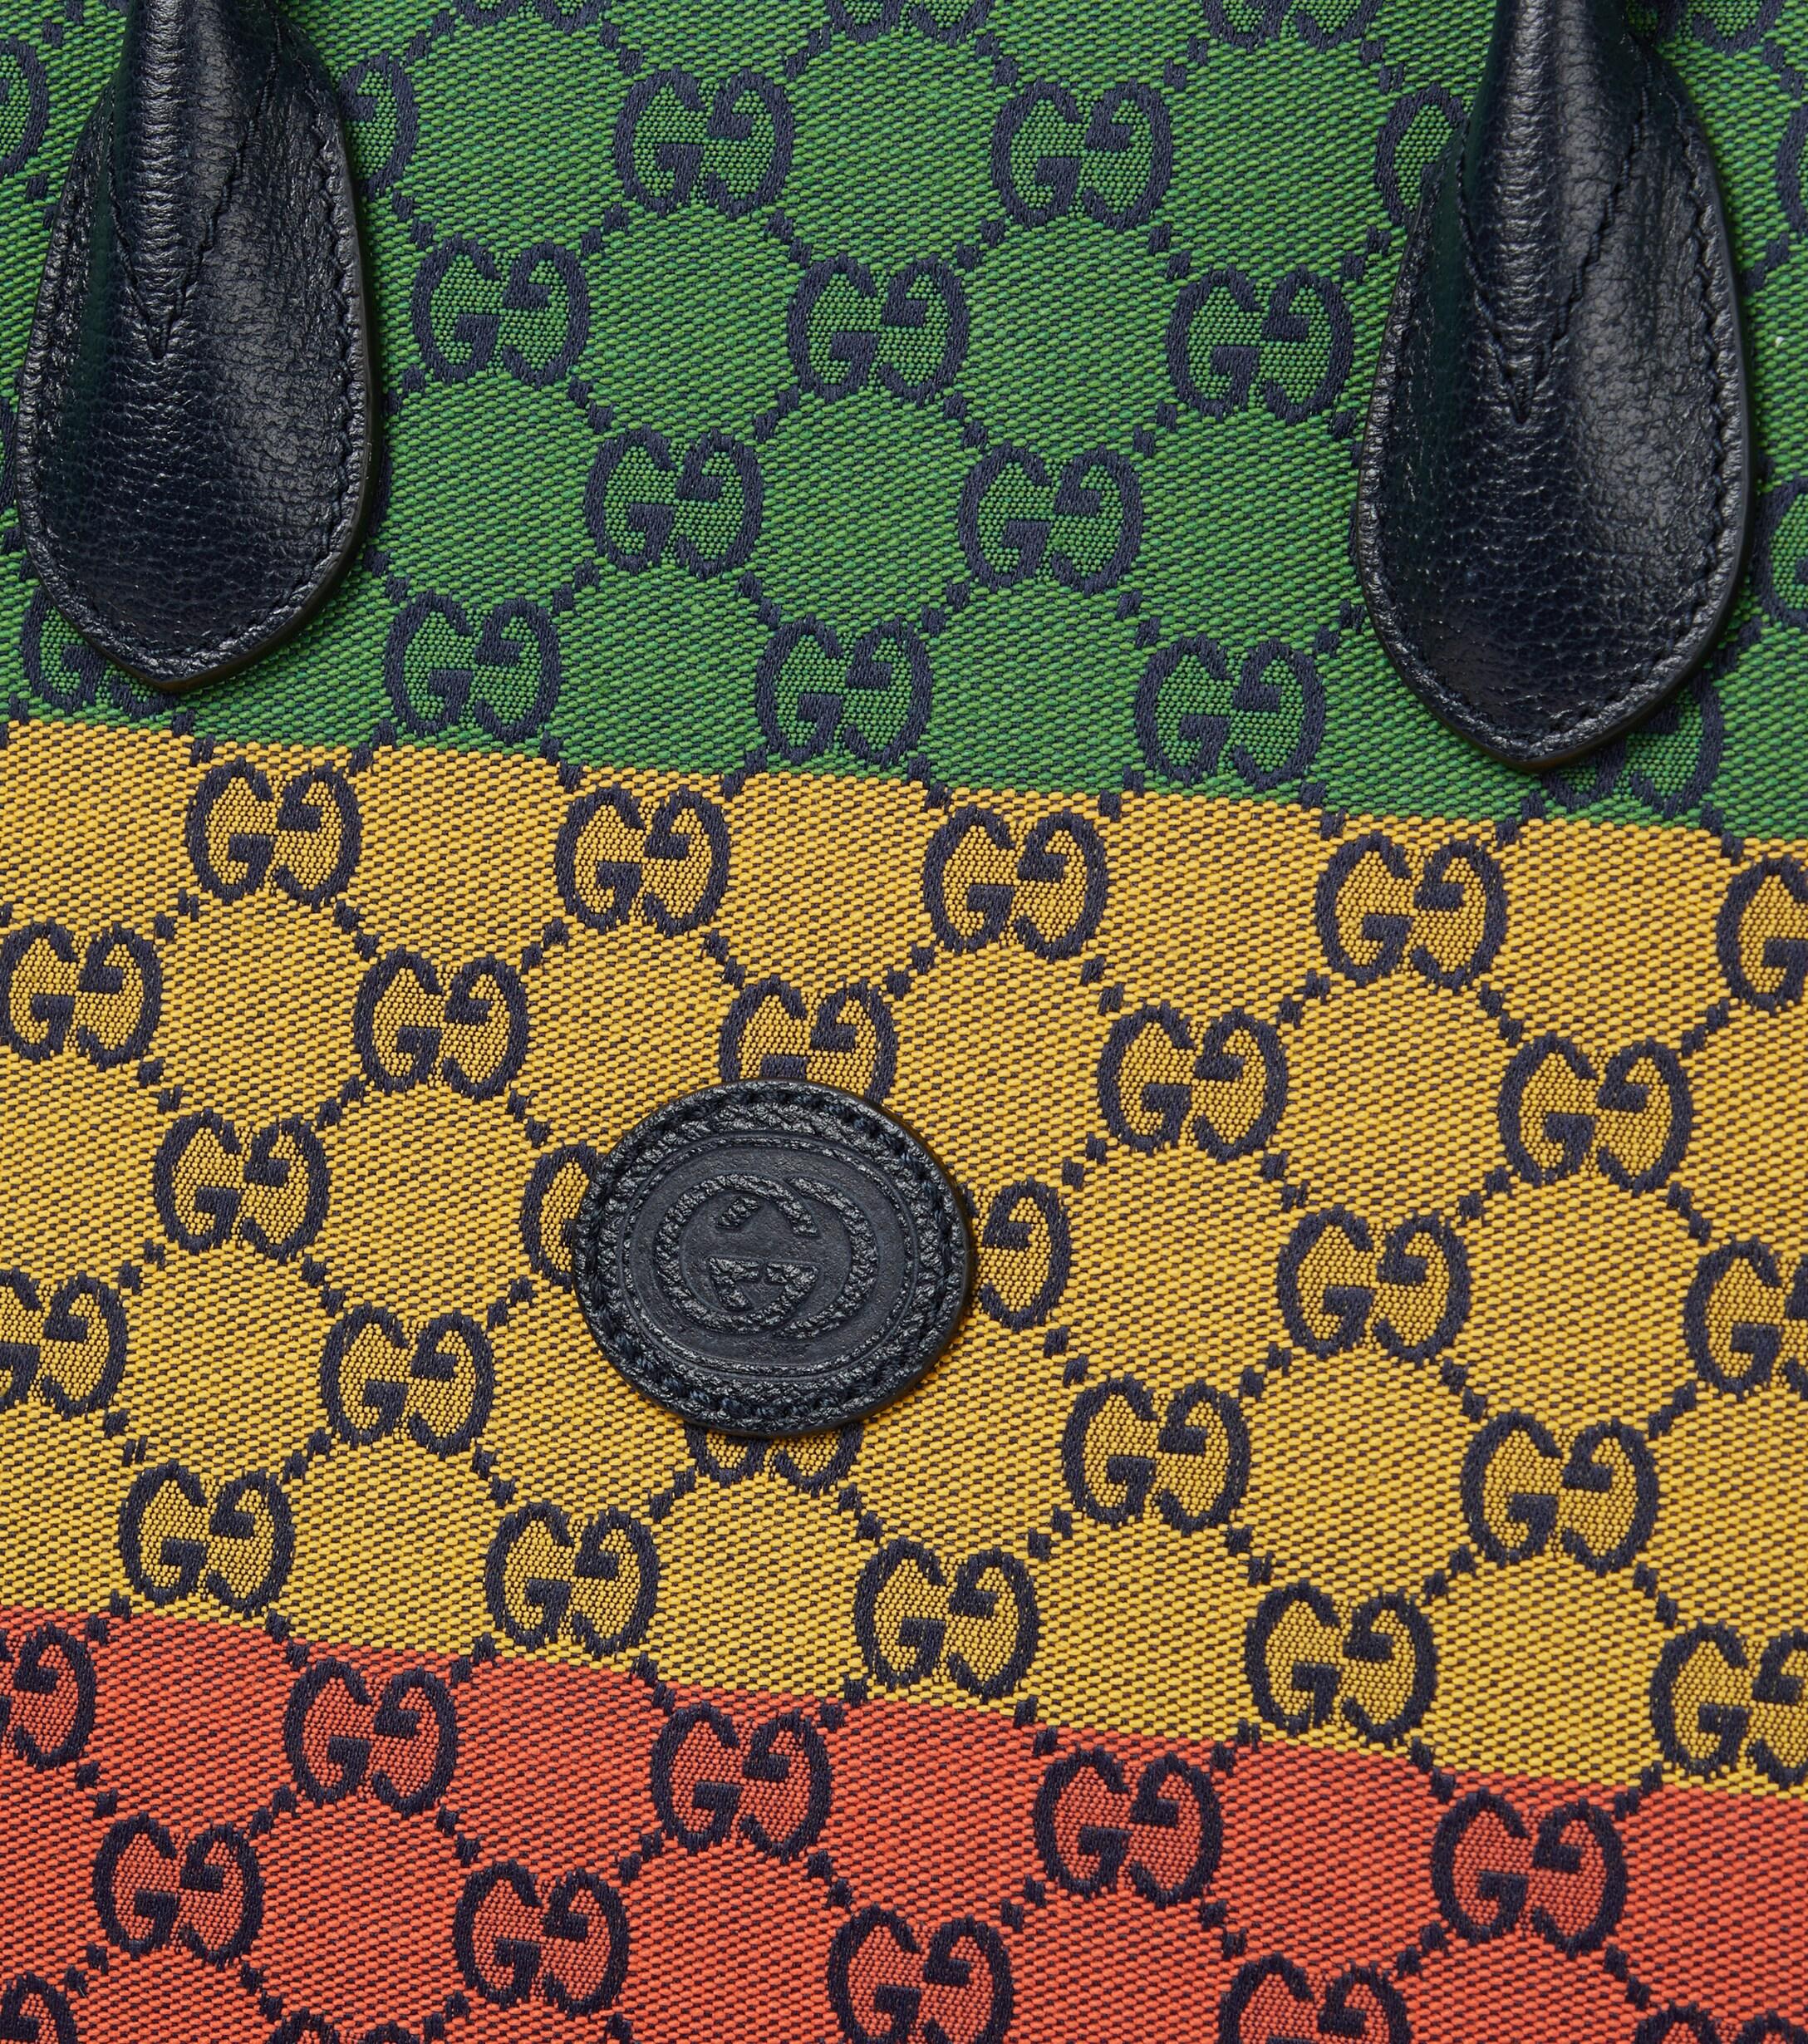 Gucci GG Multicolour Large Tote Bag in Green for Men